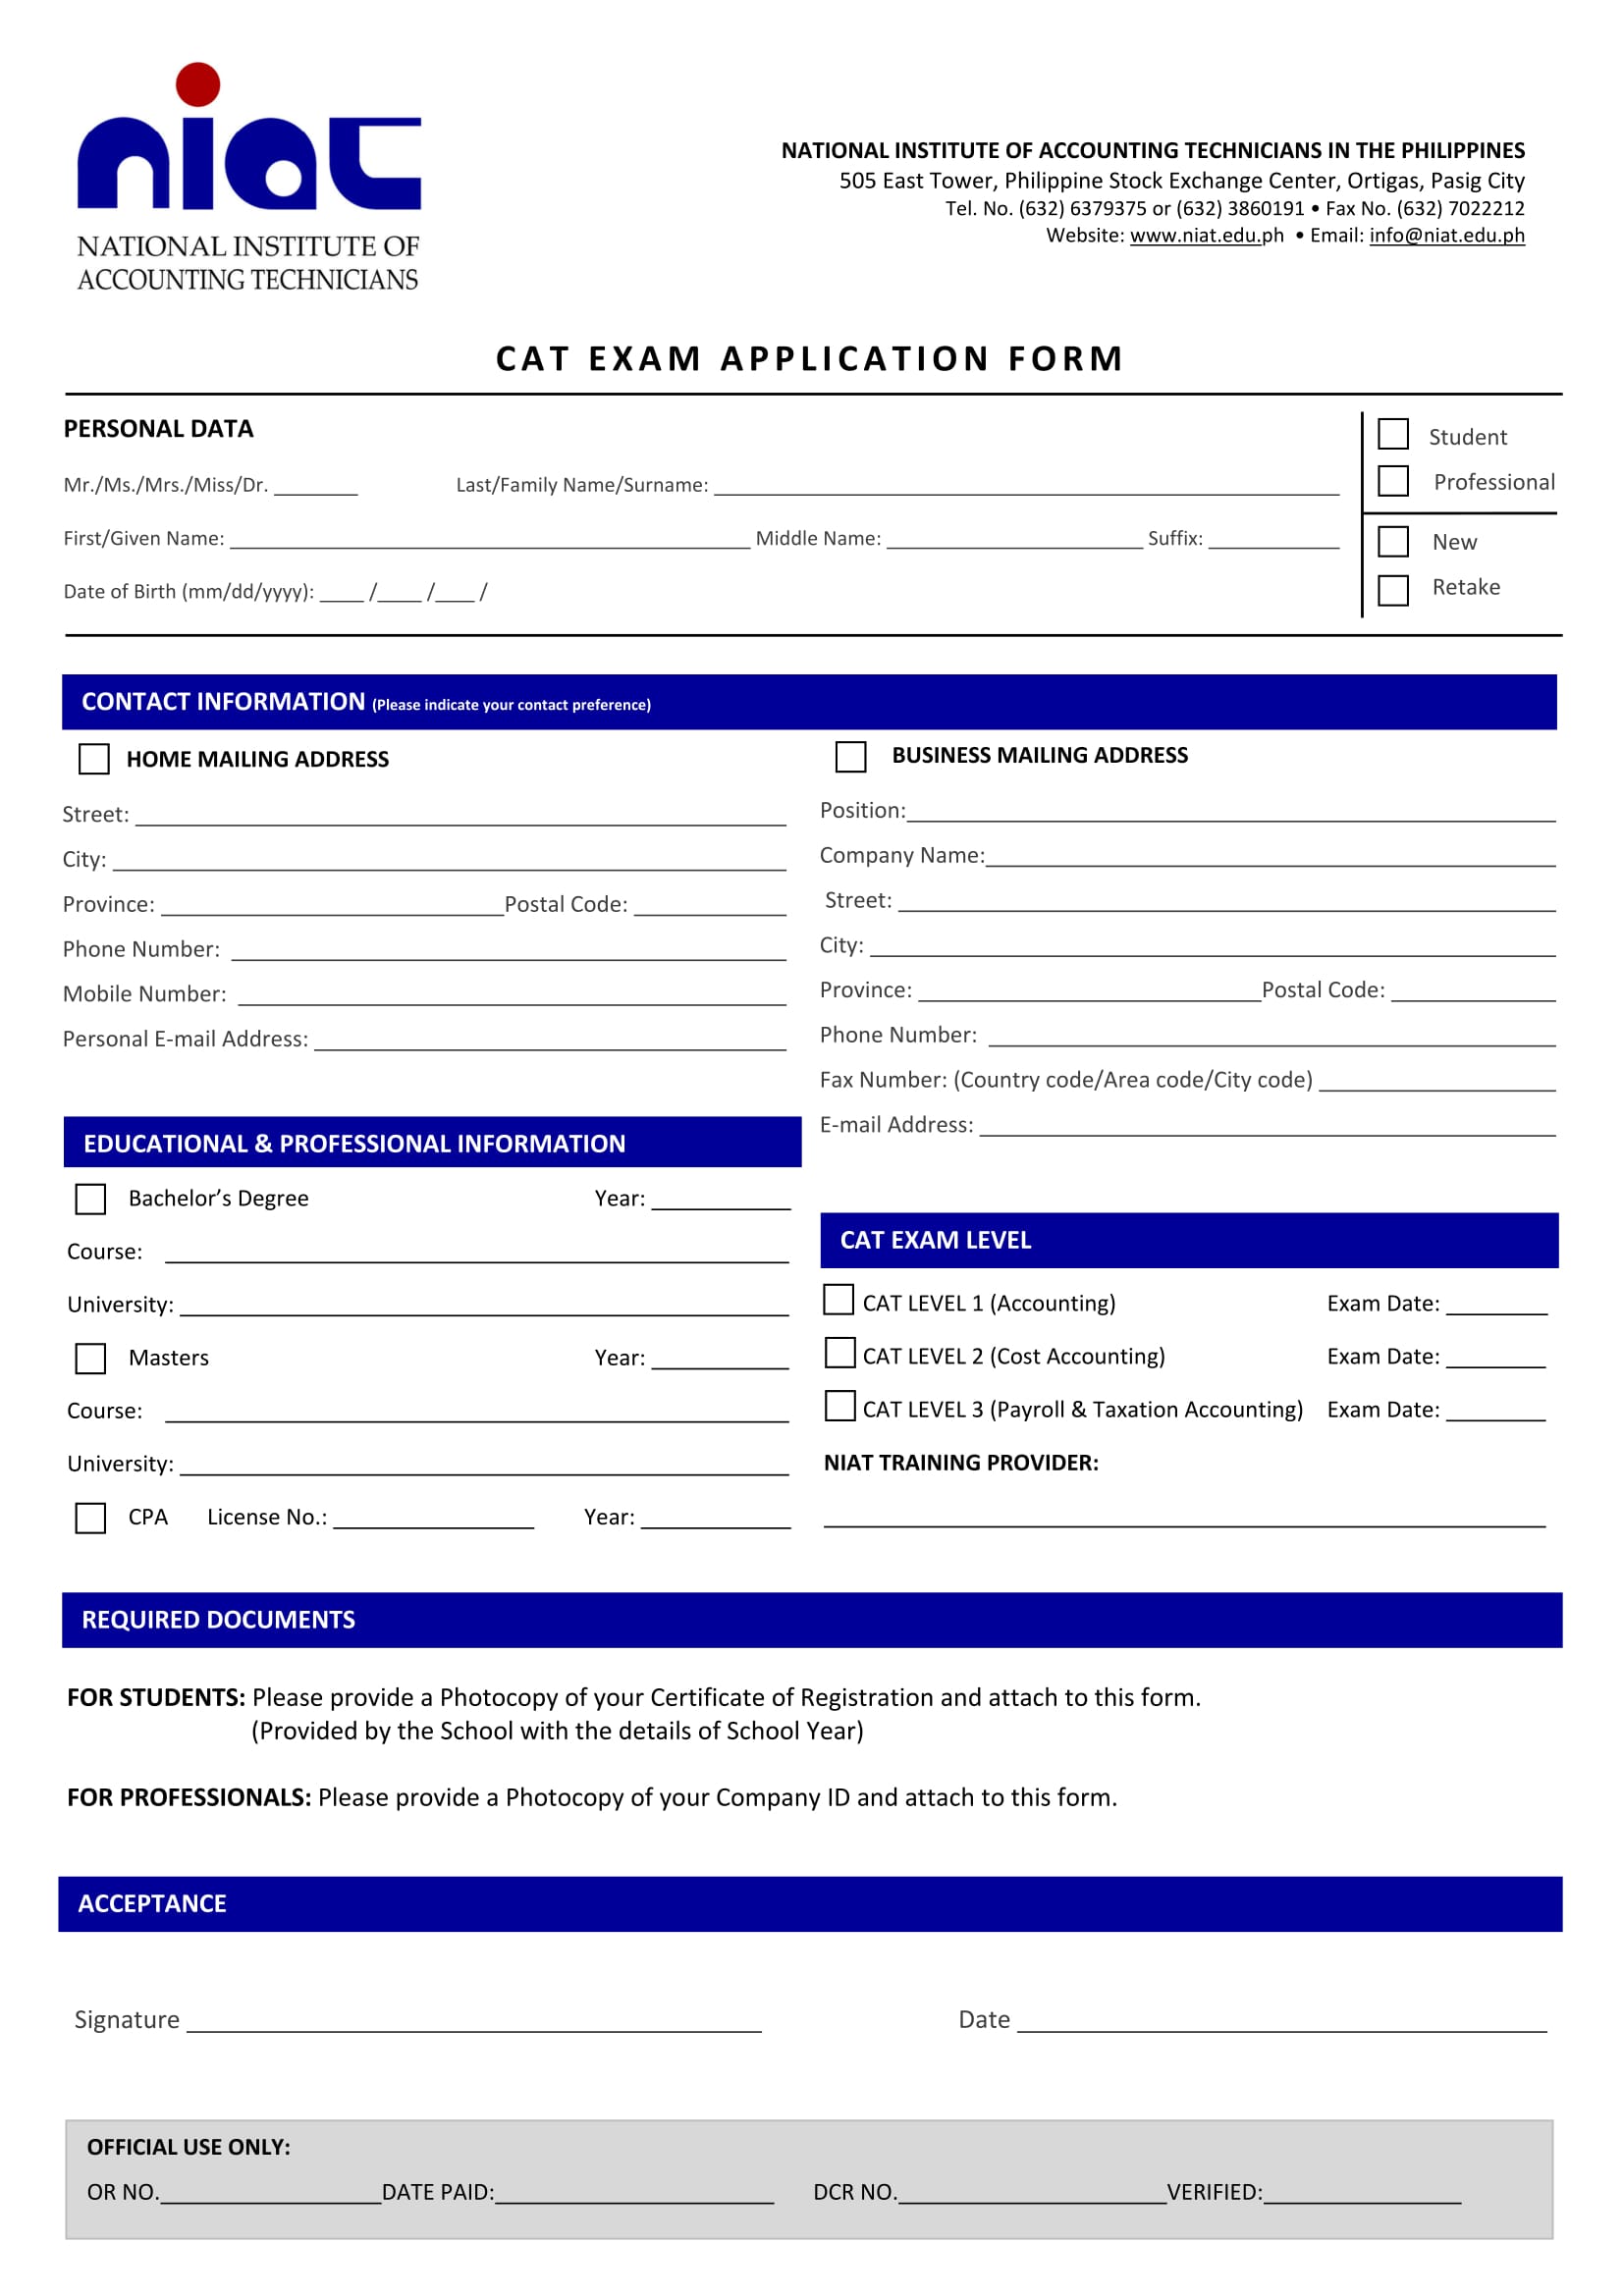 cat exam application form